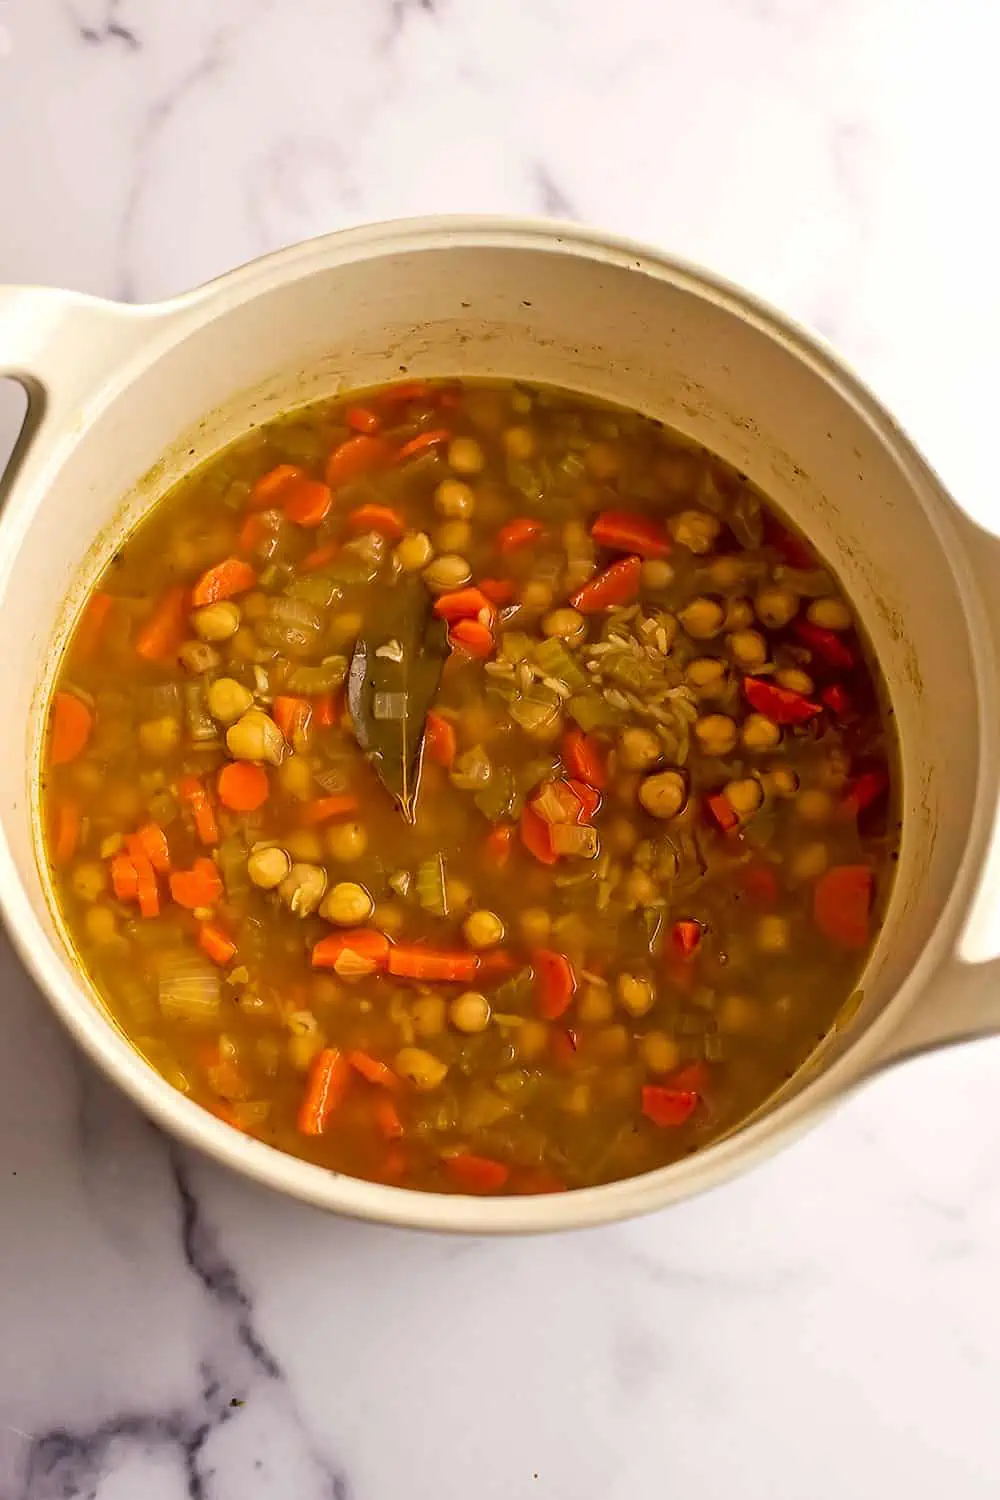 Greek vegetable soup before adding kale.